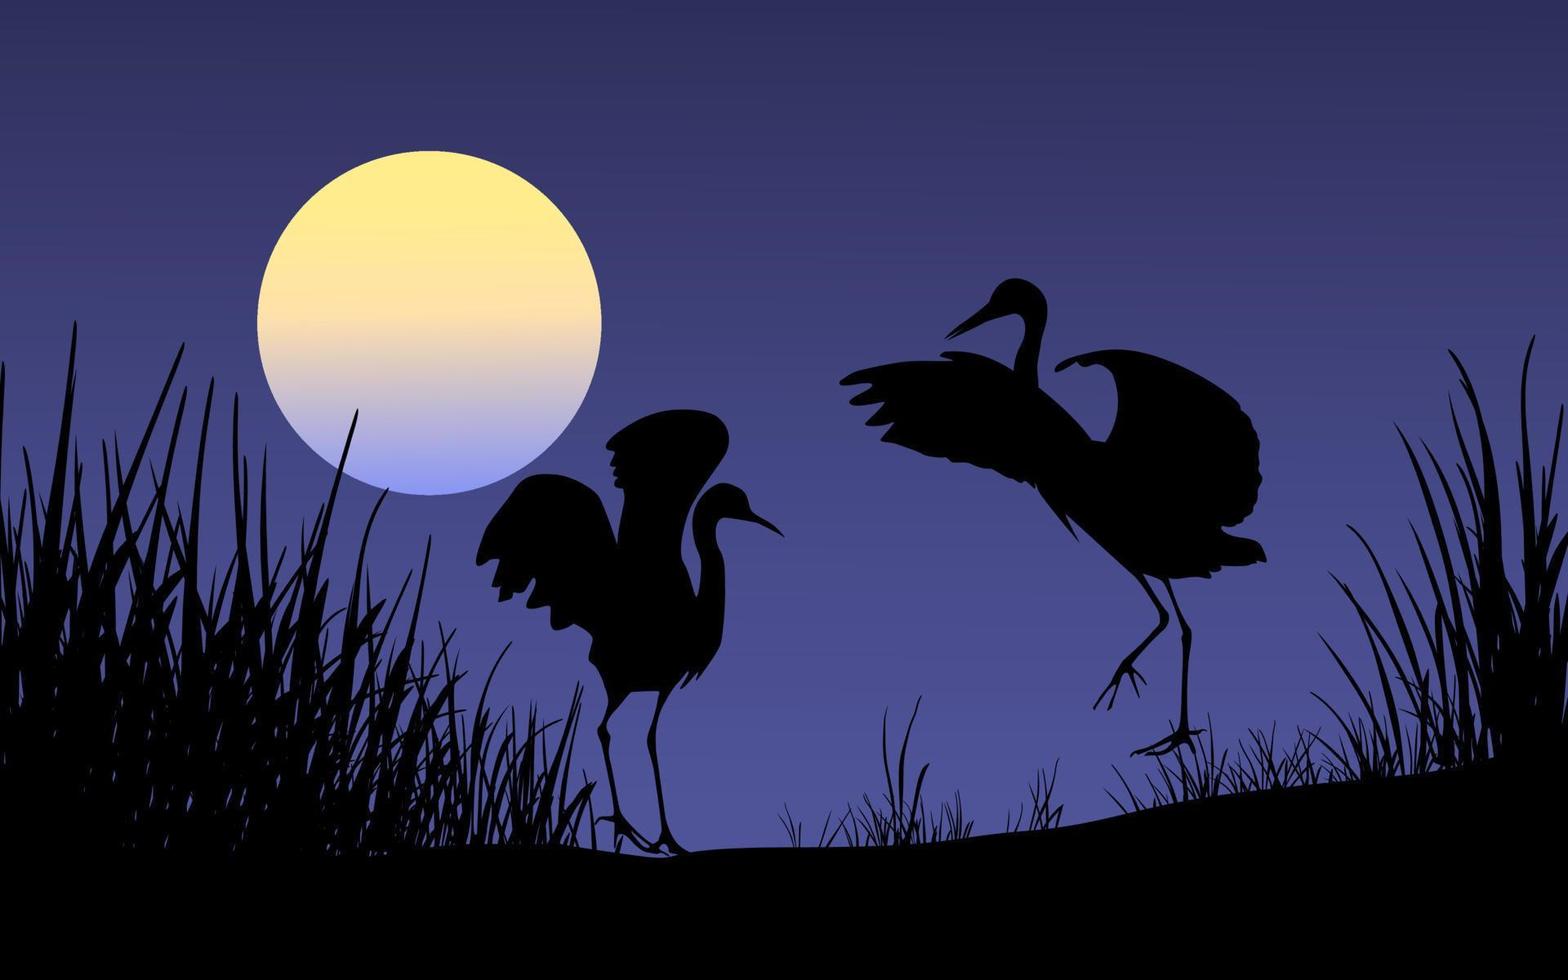 vogels silhouet in maanlicht natuur achtergrond vector